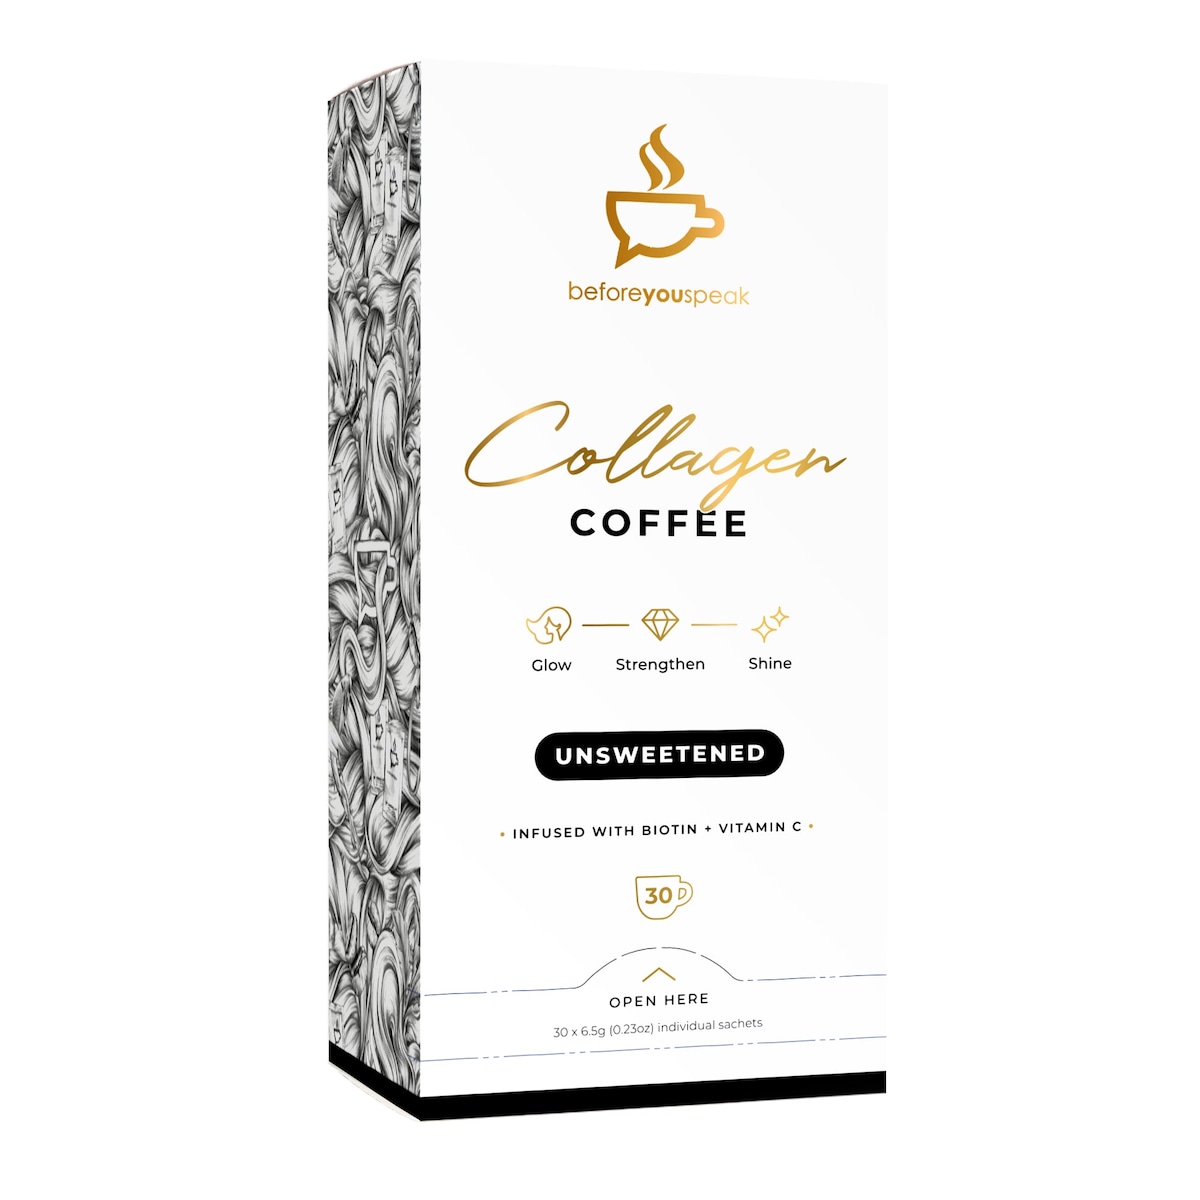 Beforeyouspeak Coffee Collagen Blend Unsweetened 30 x 6.5g